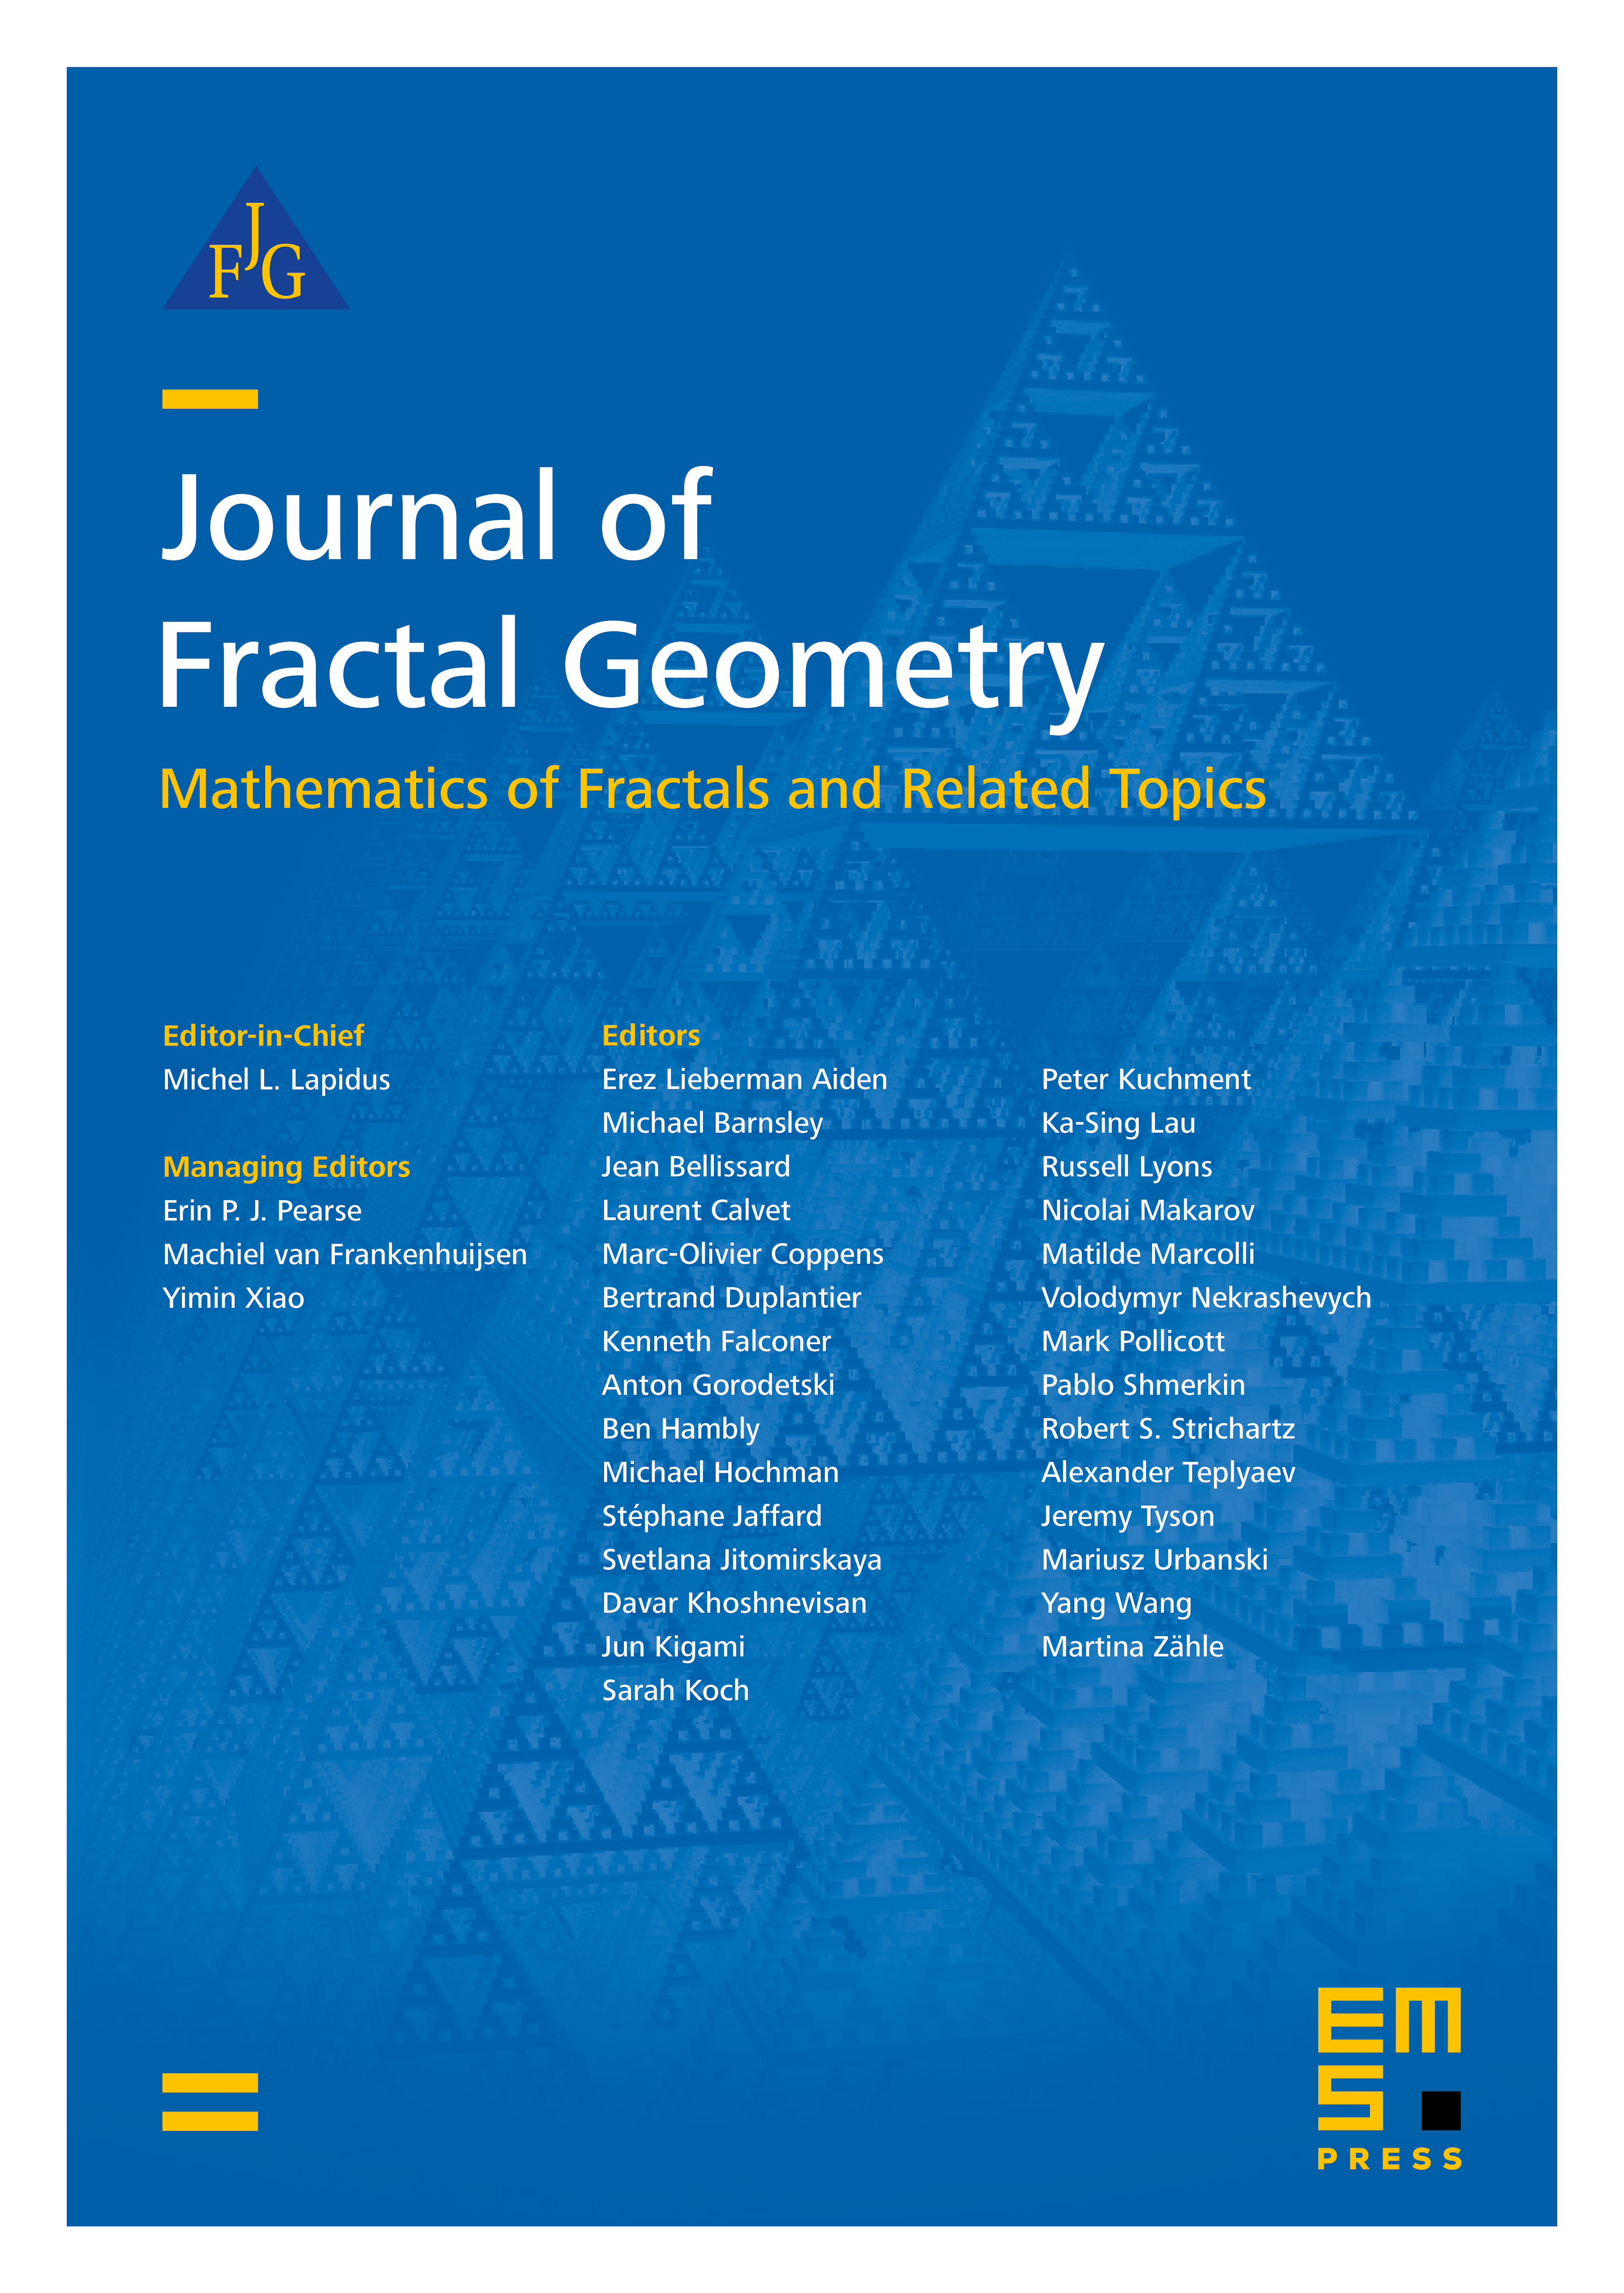 J. Fractal Geom. cover